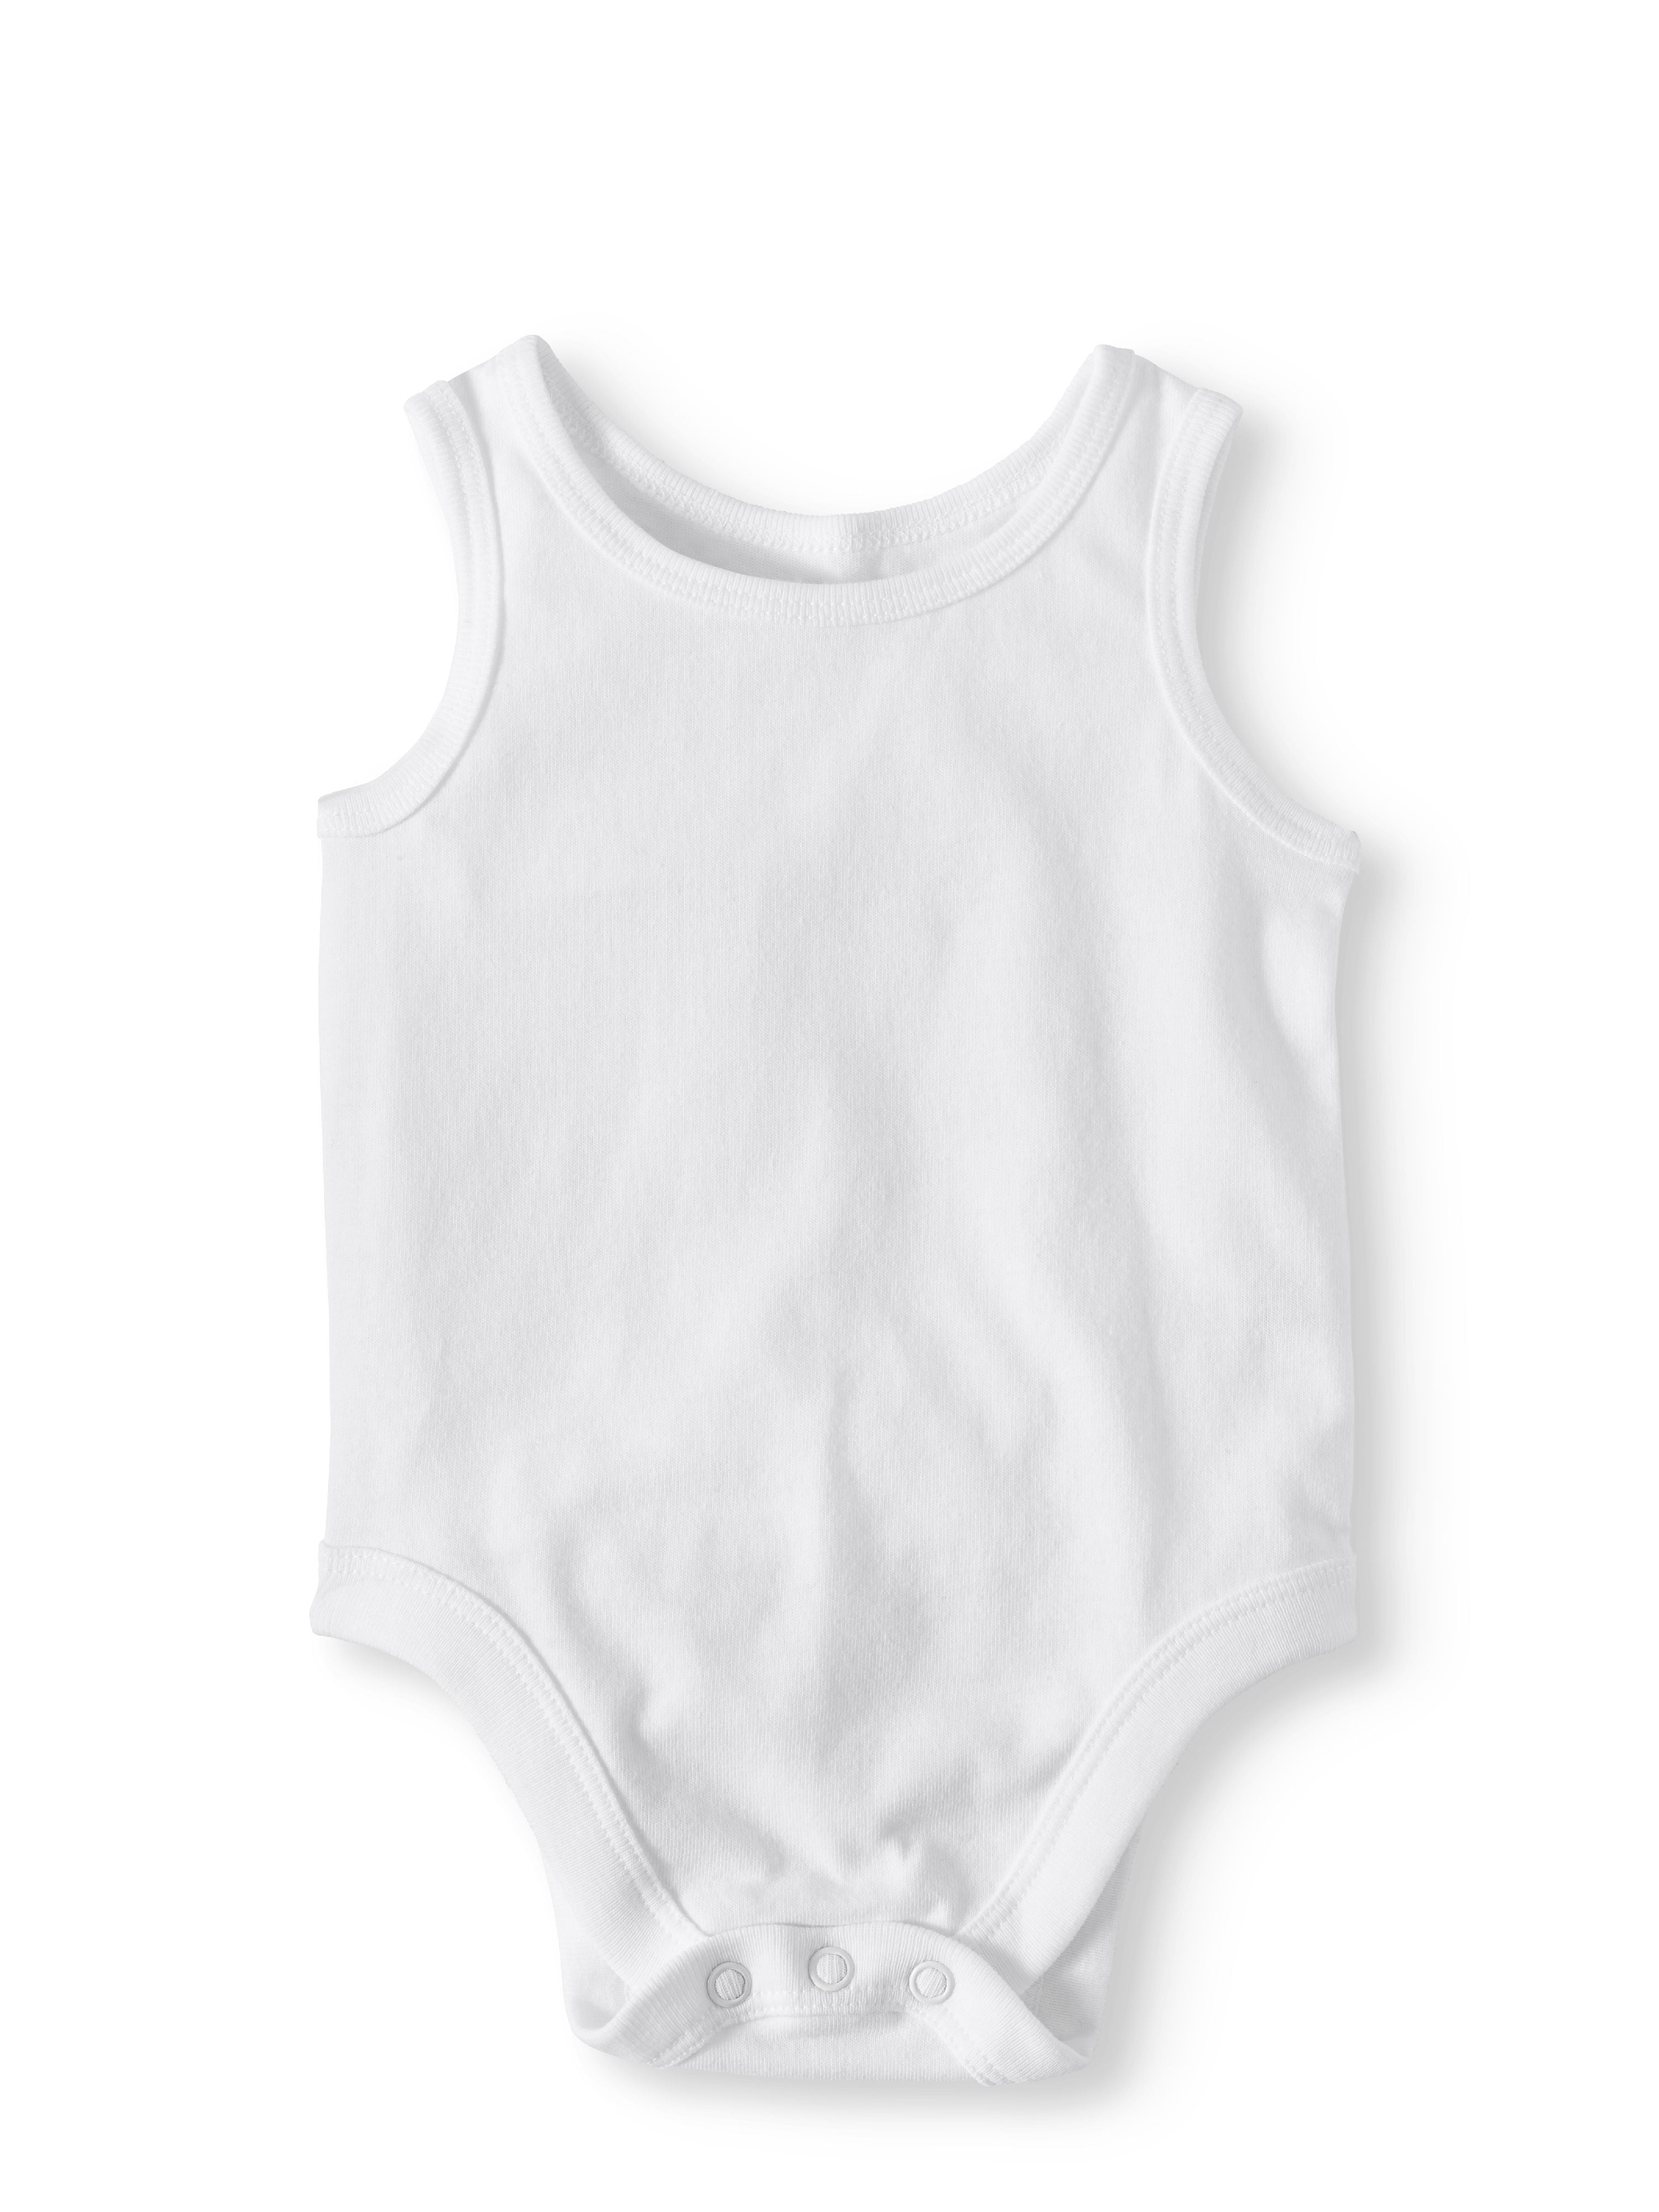 Garanimals Baby Boy Solid Tank Bodysuit - Walmart.com